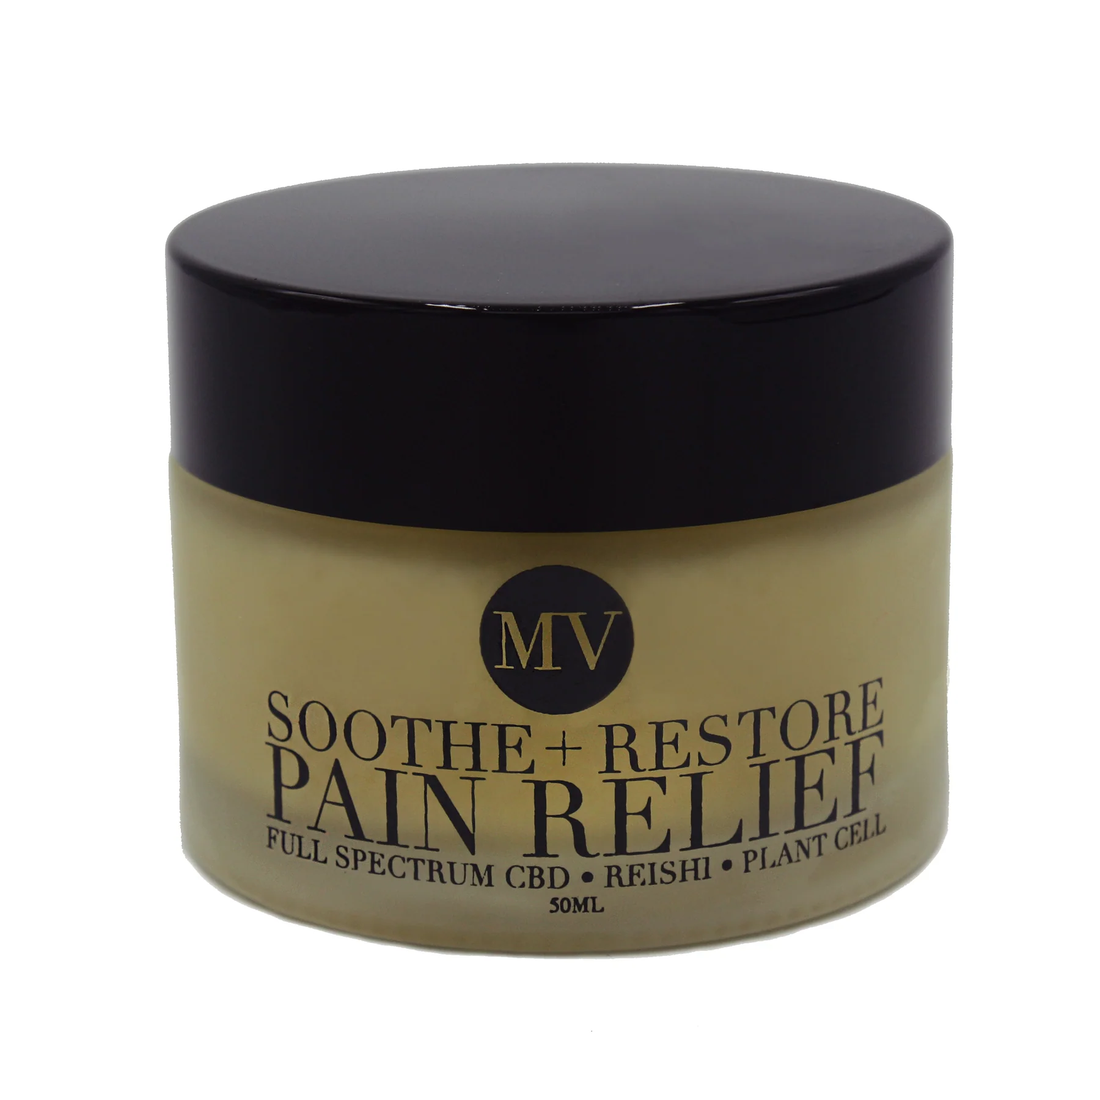 Soothe + Restore Pain Relief Cream